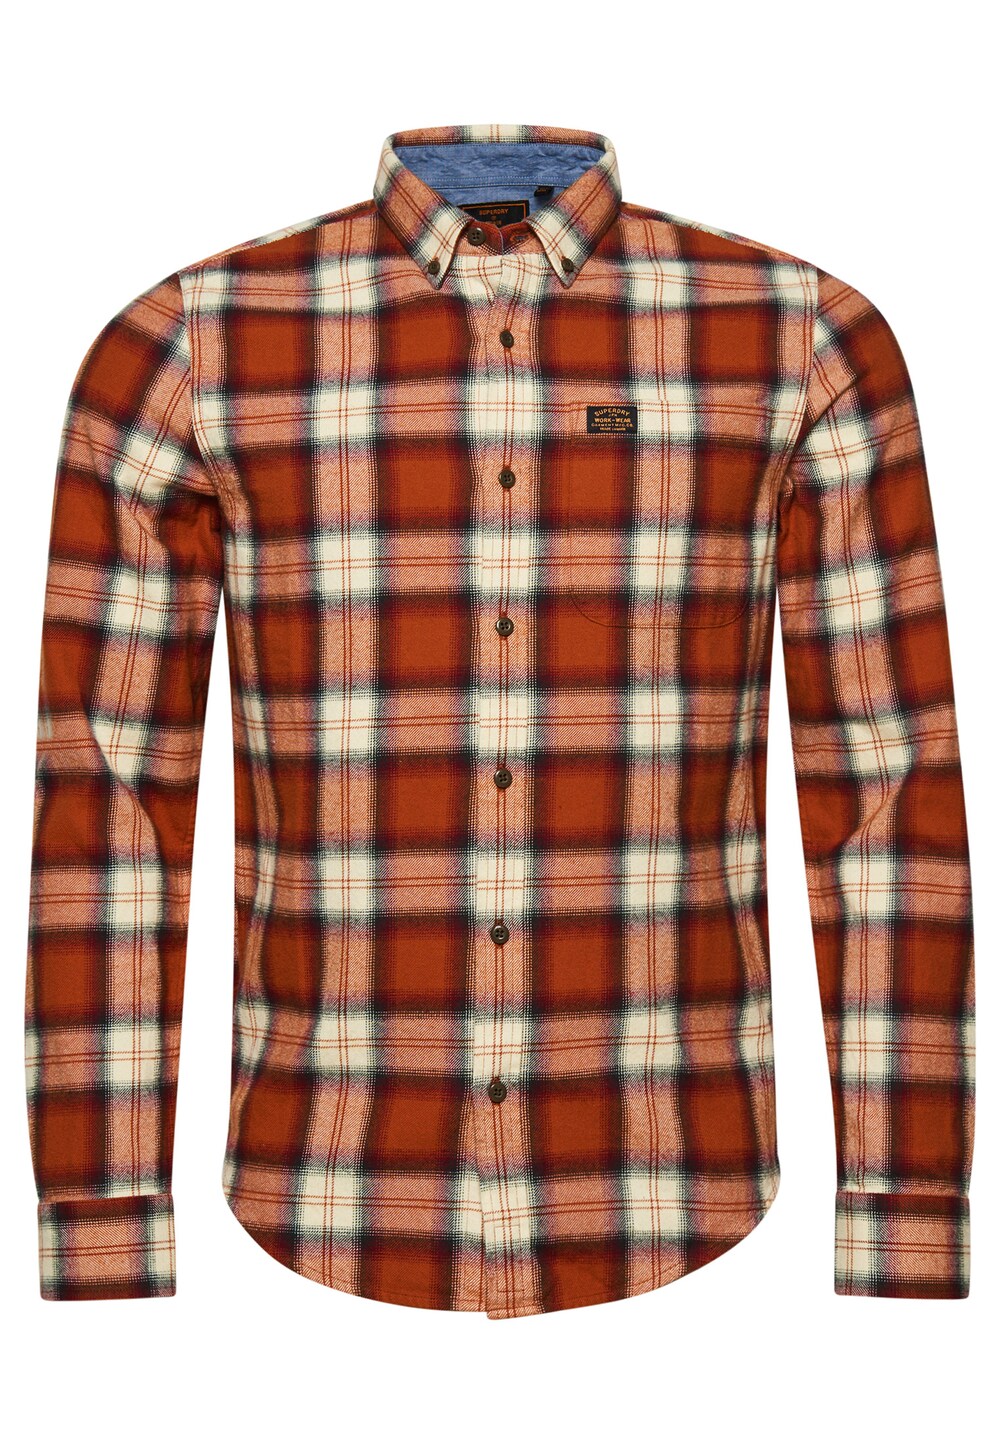 Рубашка на пуговицах стандартного кроя Superdry Vintage Lumberjack, апельсин/лобстер